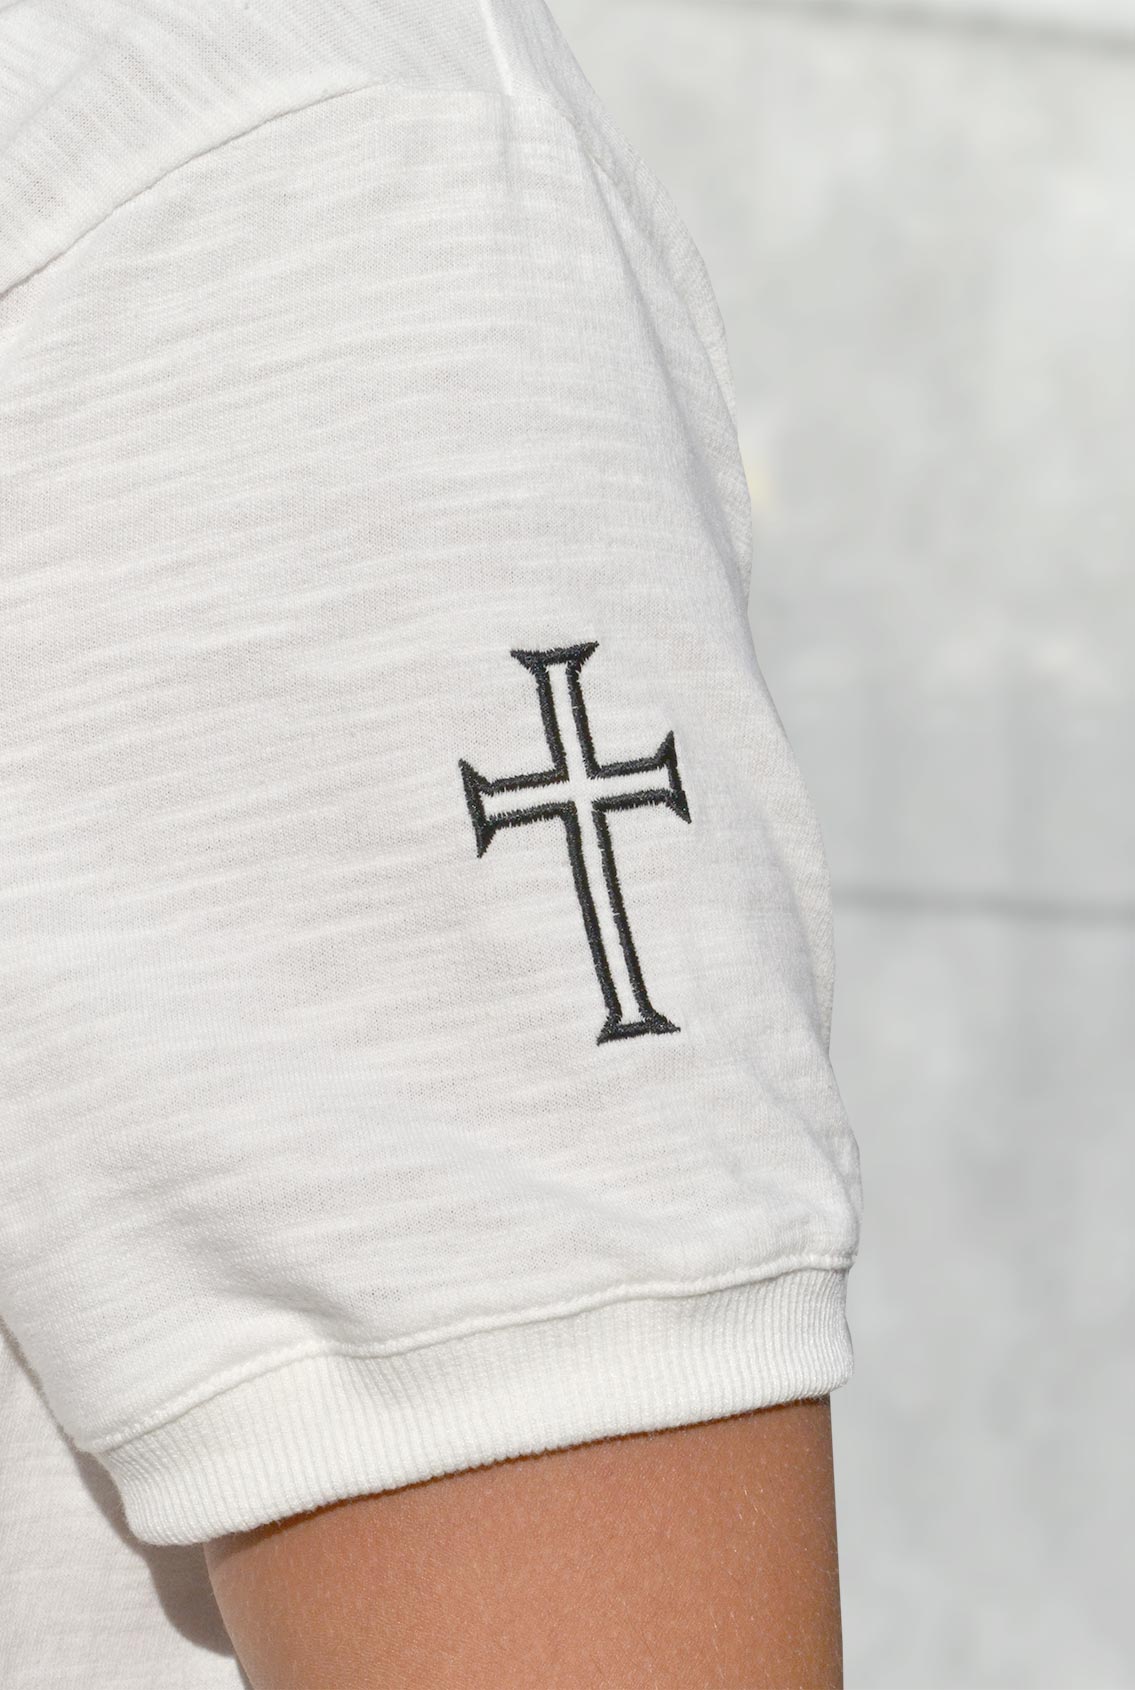 Cross on t-shirt sleeve